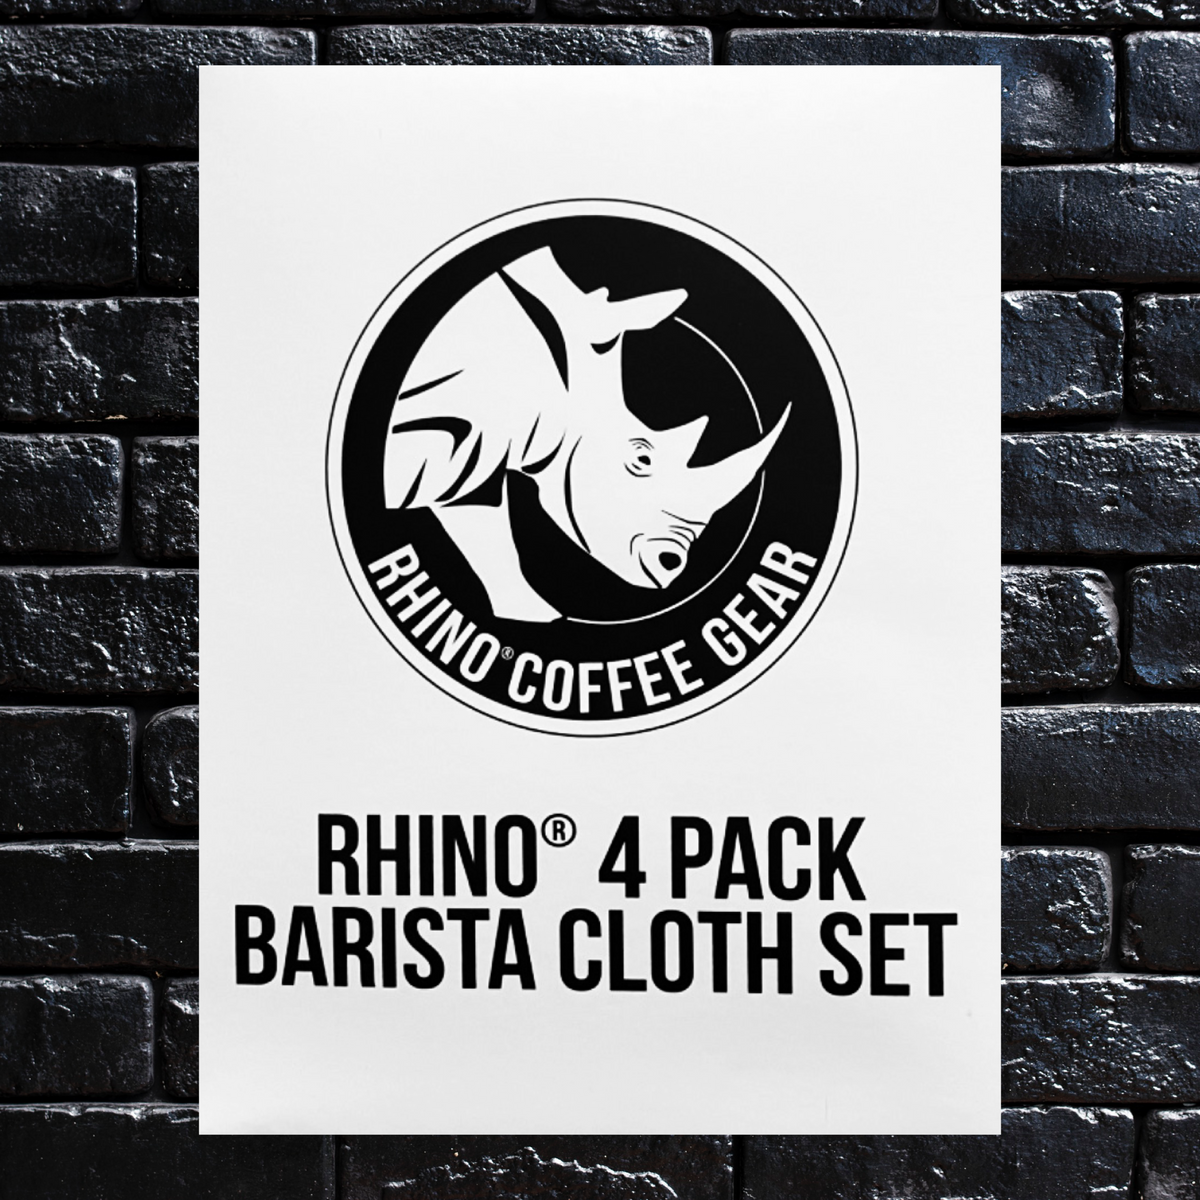 Rhinowares Barista Cloth Set (4 Pack)